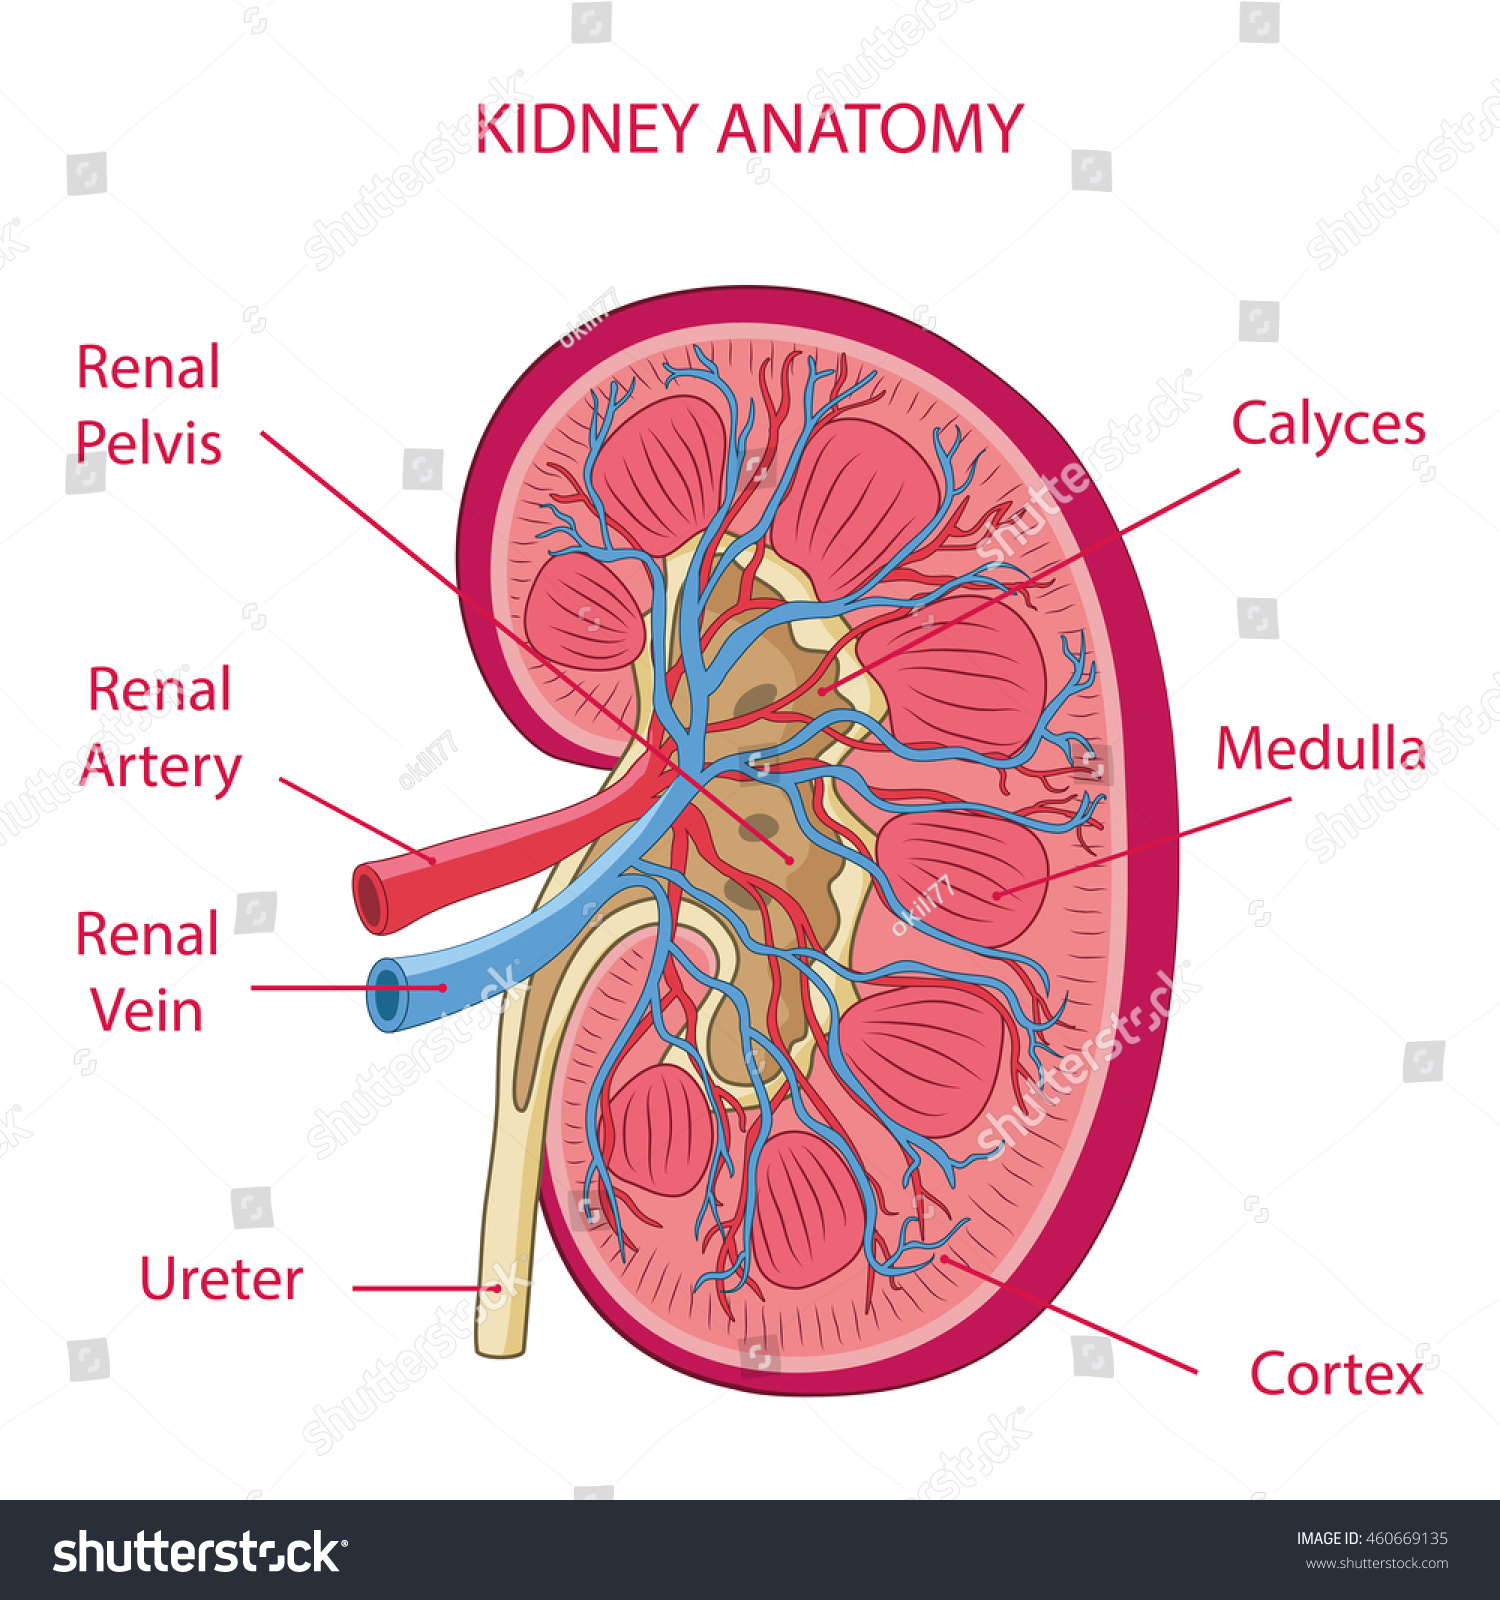 Kidney Anatomy Illustration Vector Stock Vector 460669135 - Shutterstock